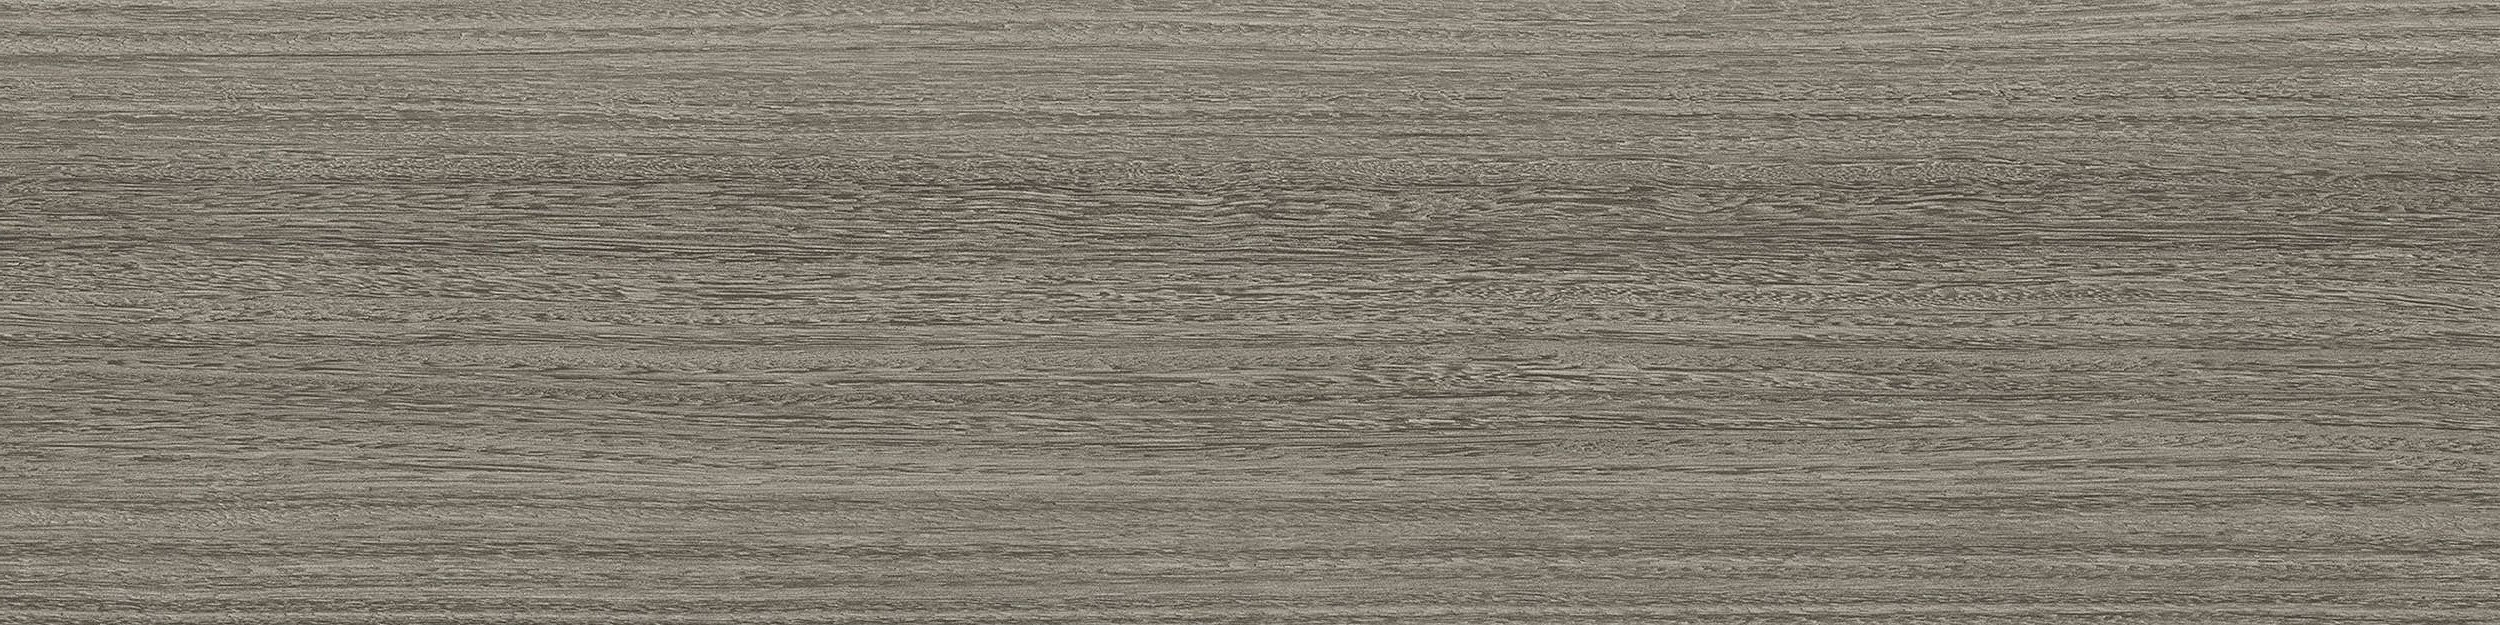 Textured Woodgrains LVT In Greywood image number 1